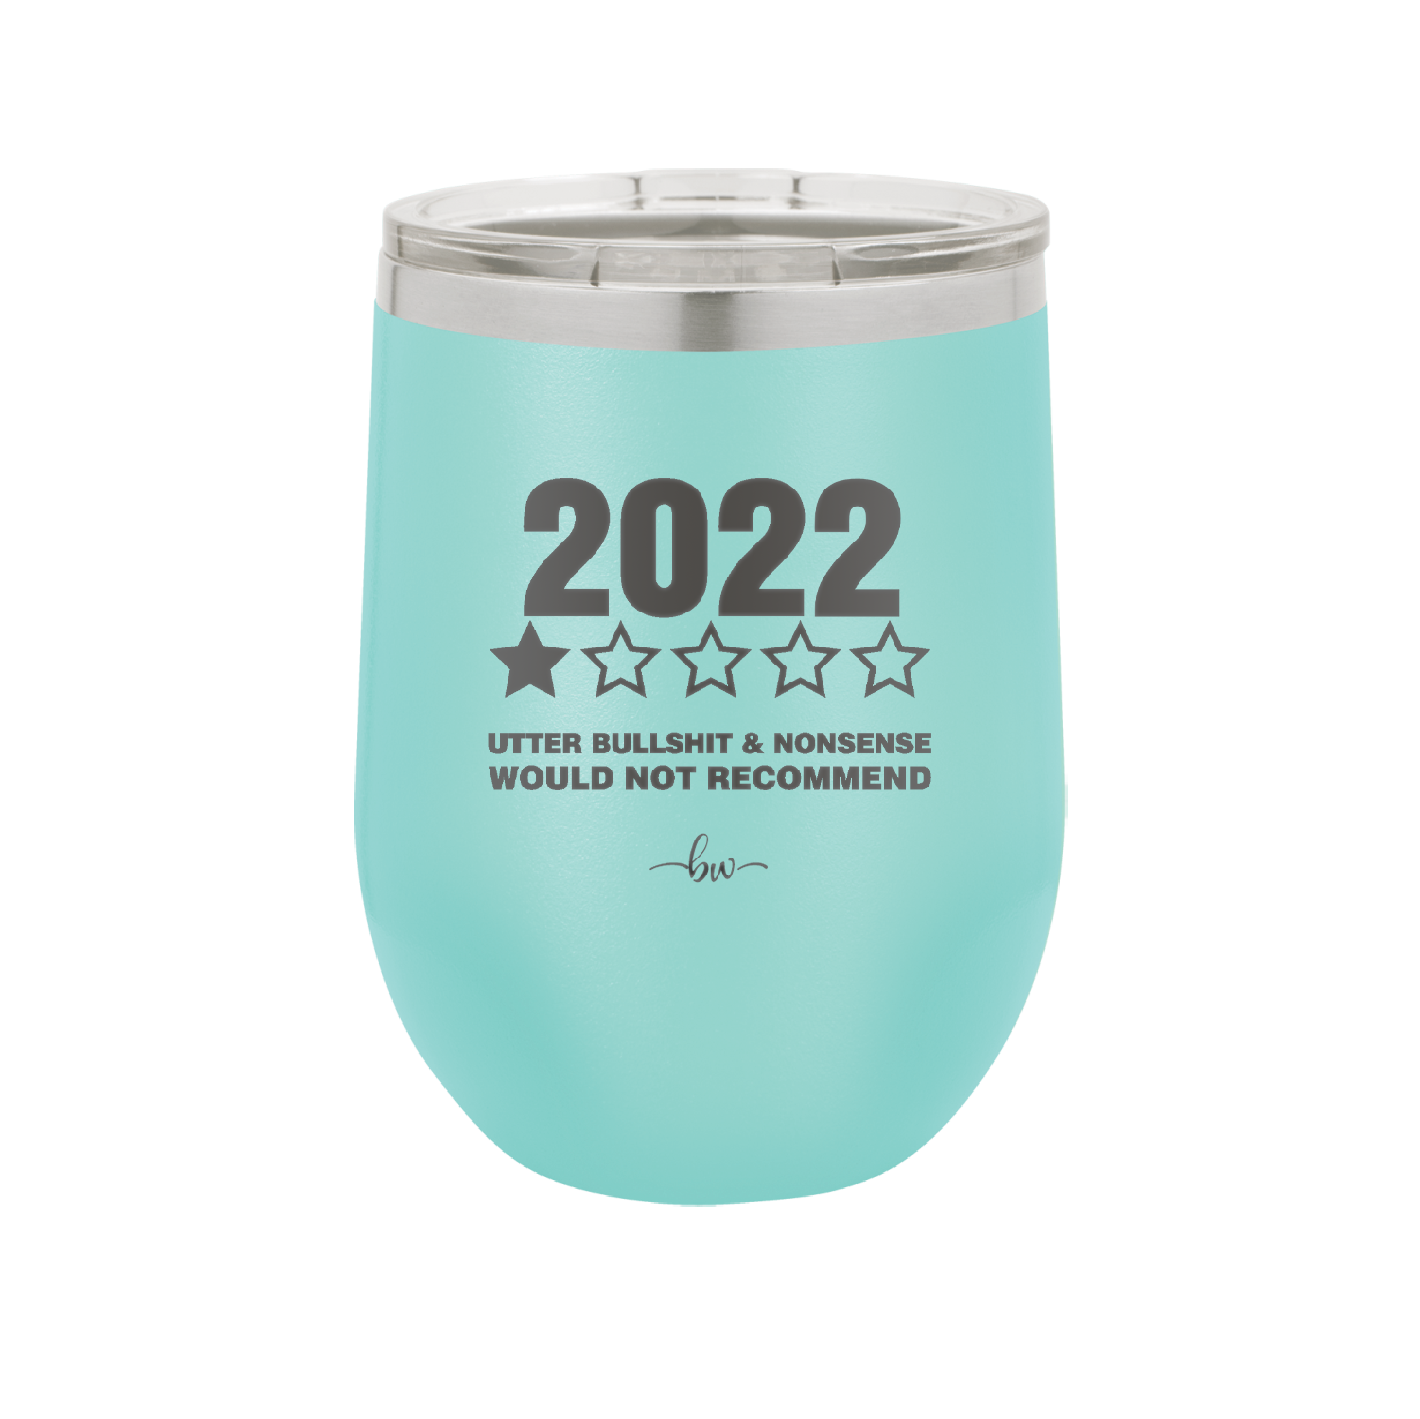 12 oz wine cup 2022 utter bullshitt and nonsense would not recommend - seafoam